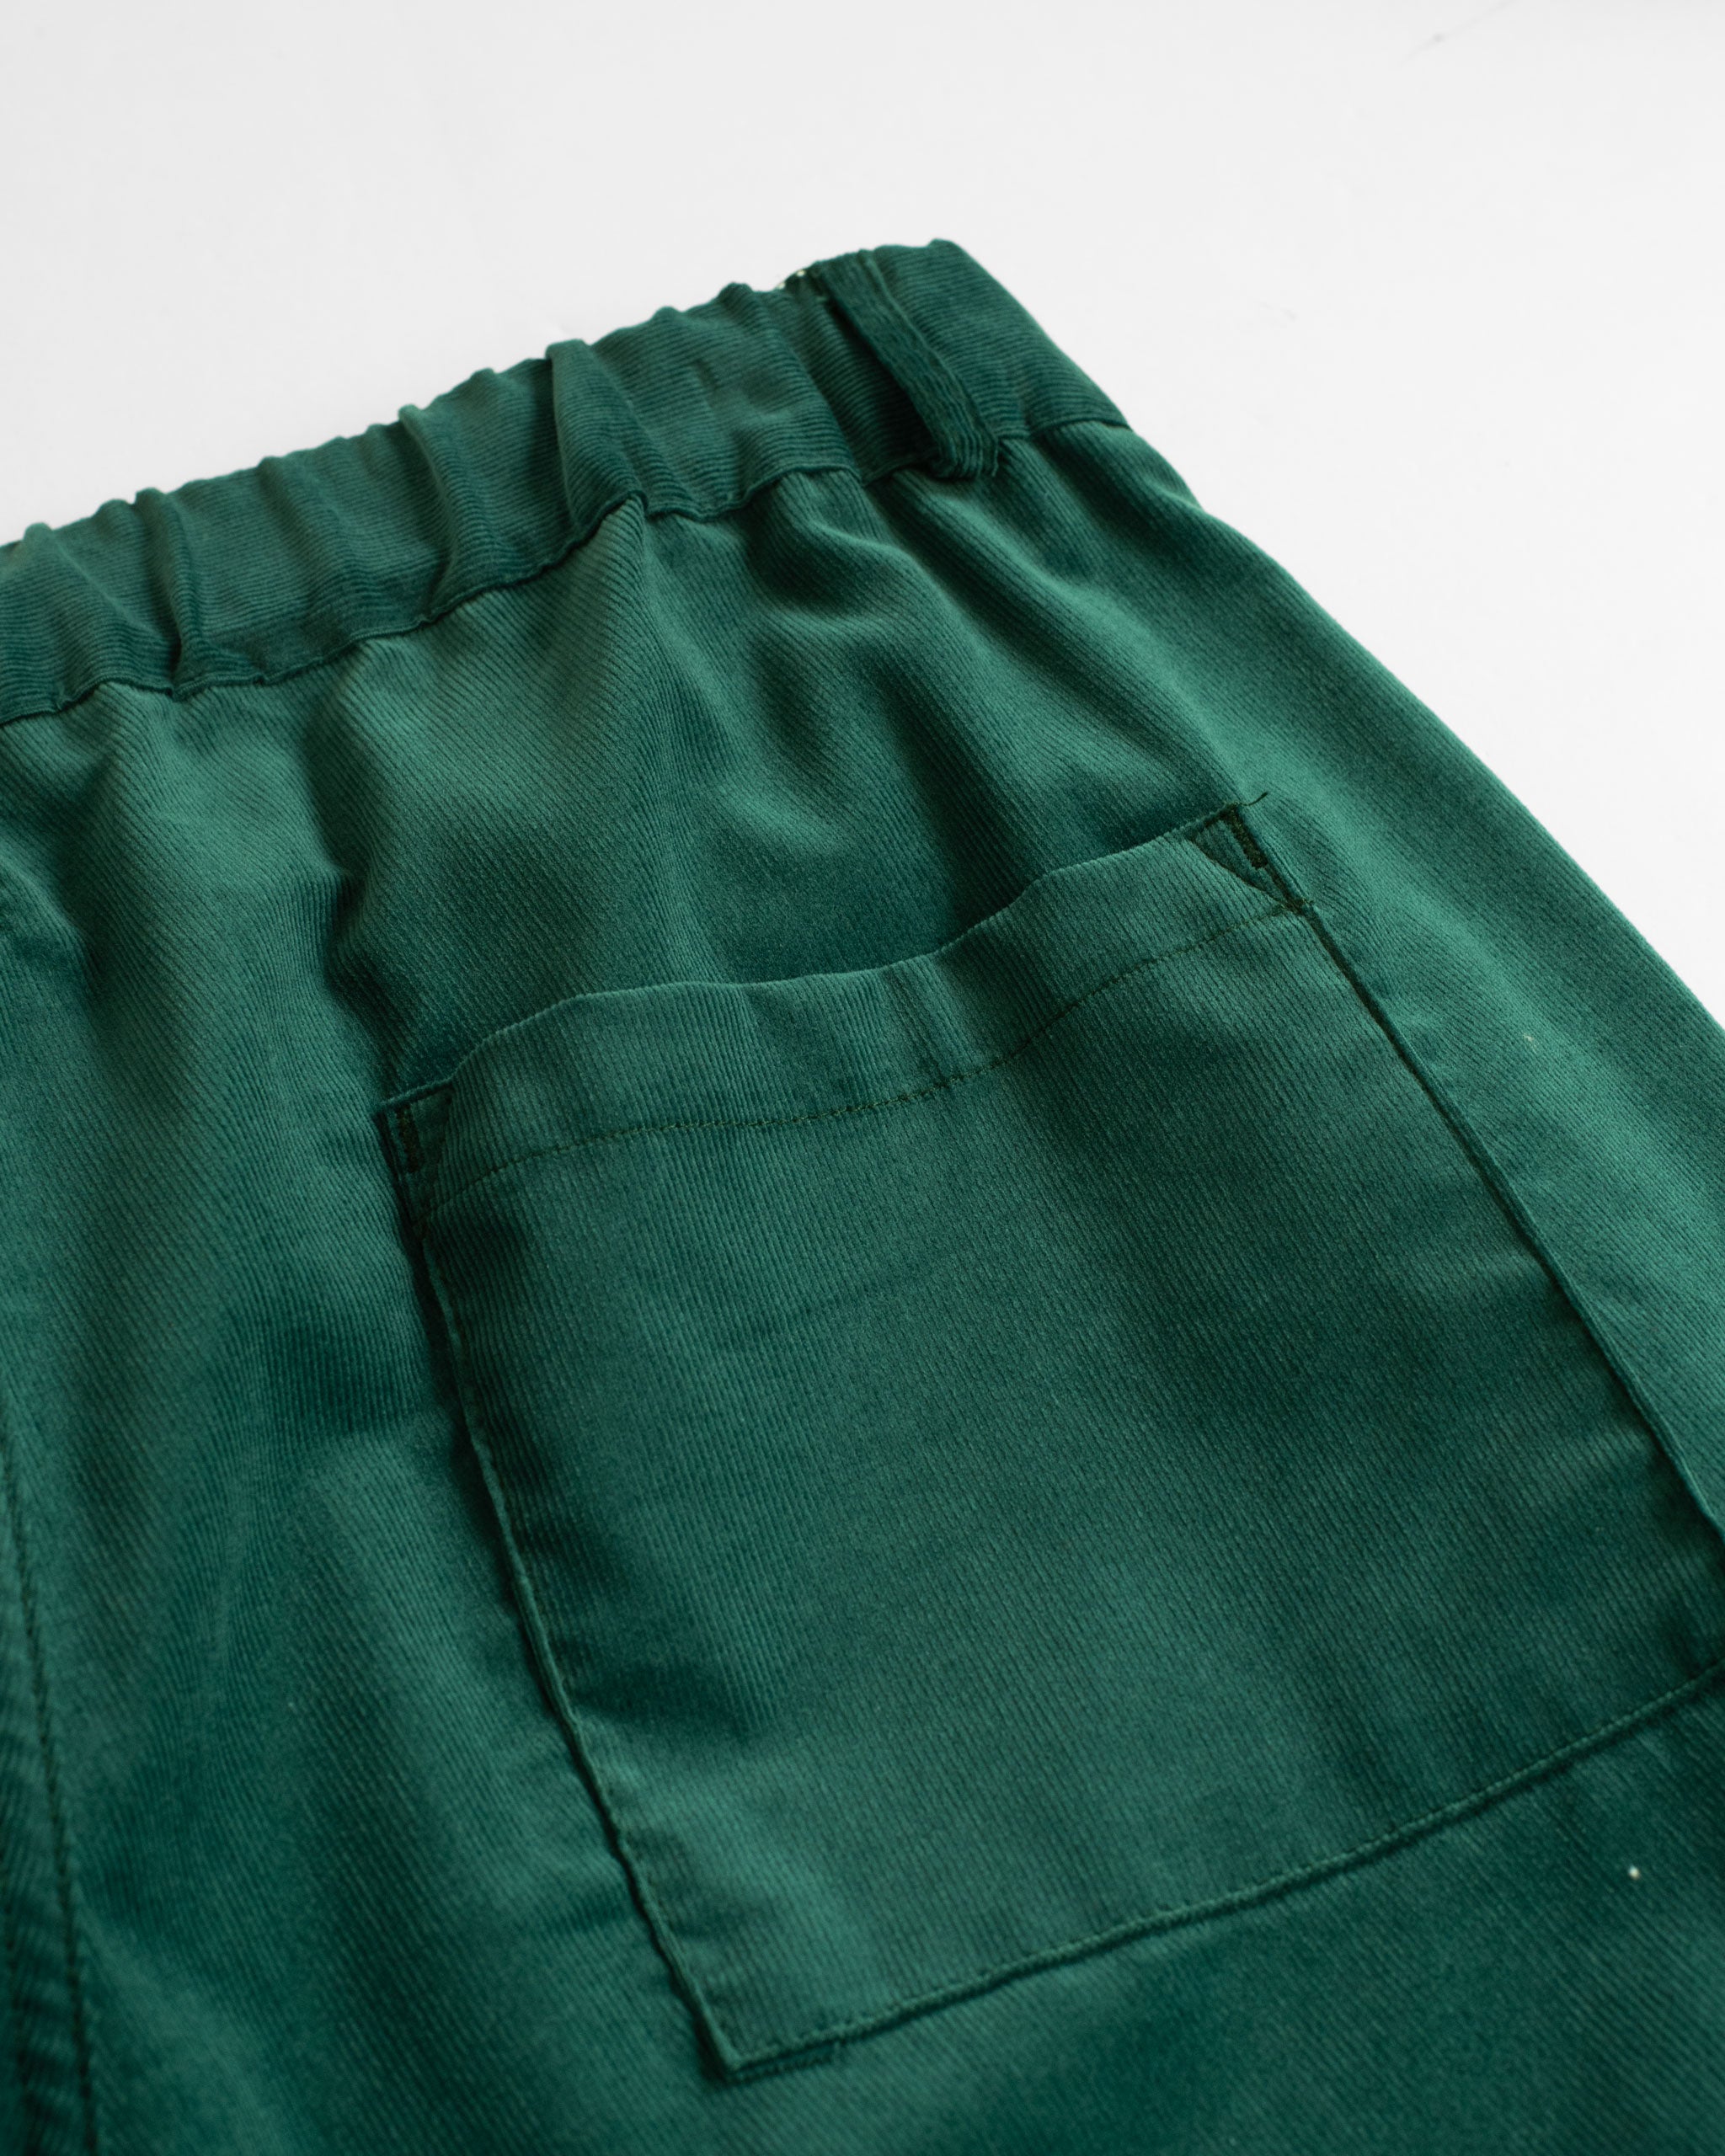 Back Pocket shot of Forest Green Solid Corduroy Leisure Shorts